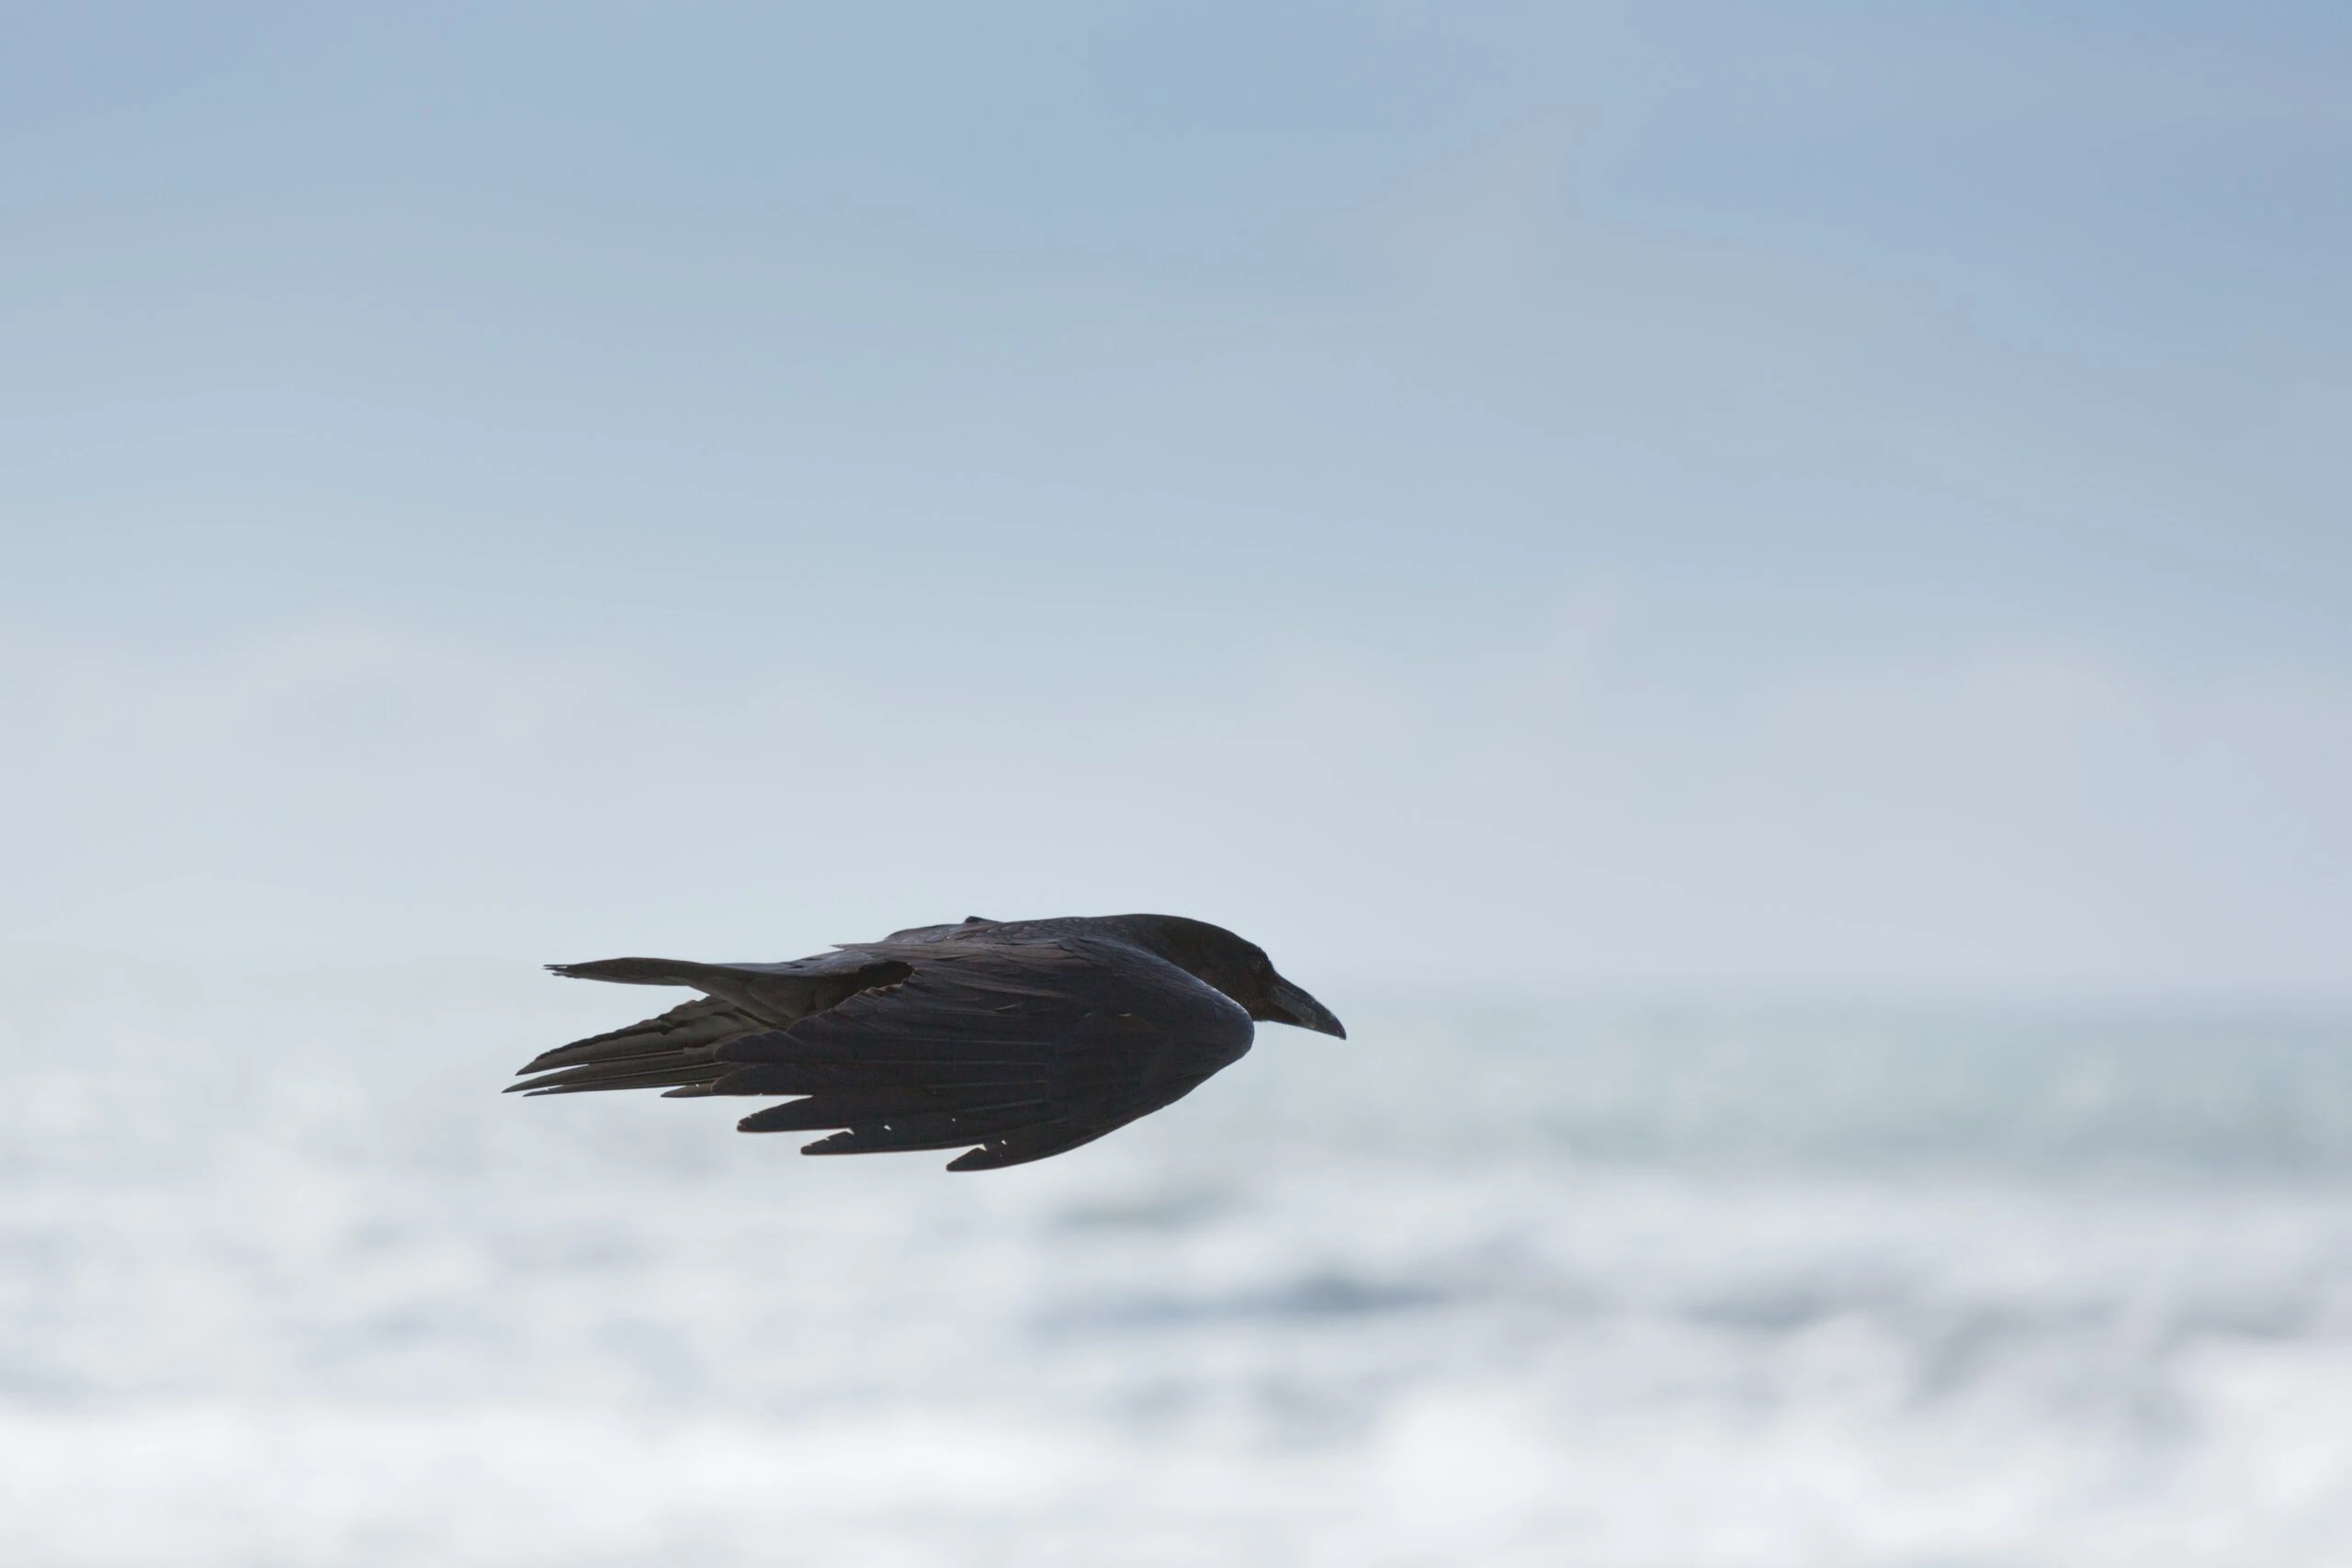 ignacio-giri-Black Crow in flight-unsplash